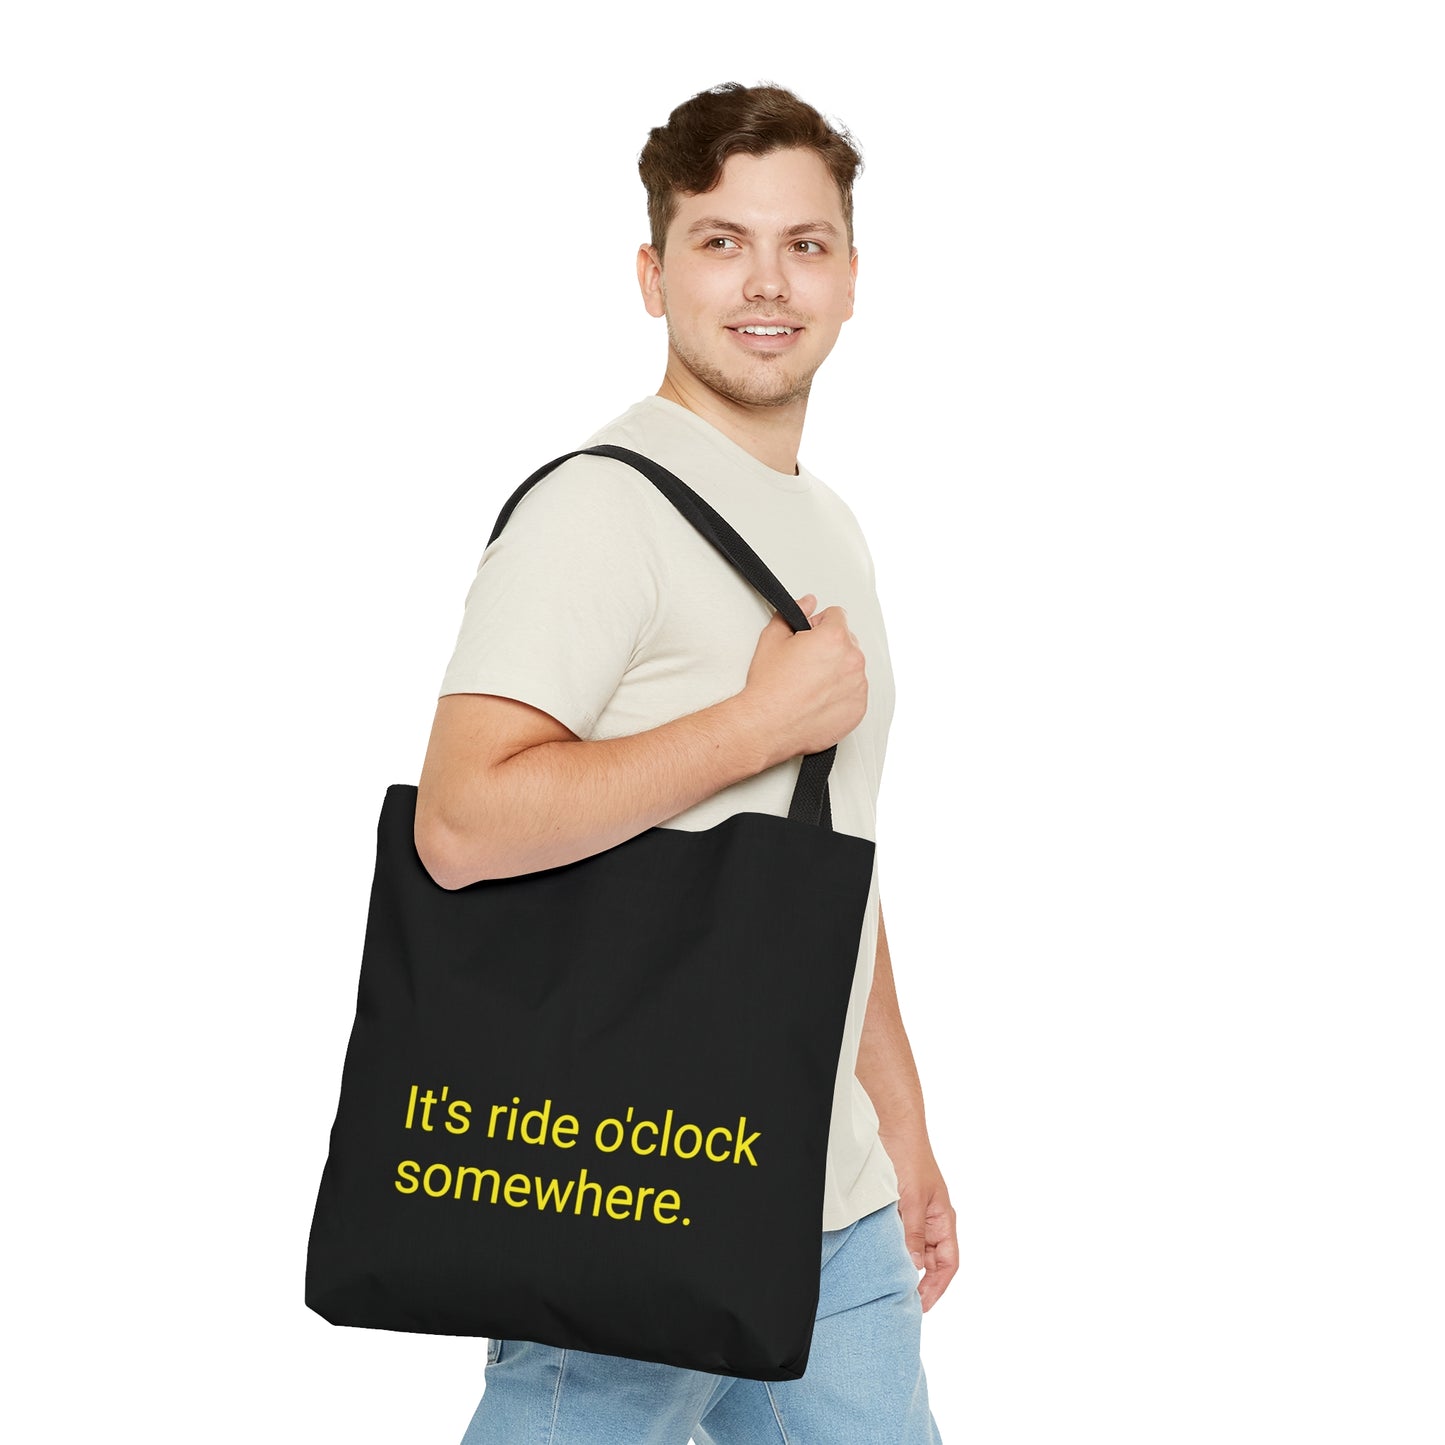 "It's ride o'clock somewhere" tote bag